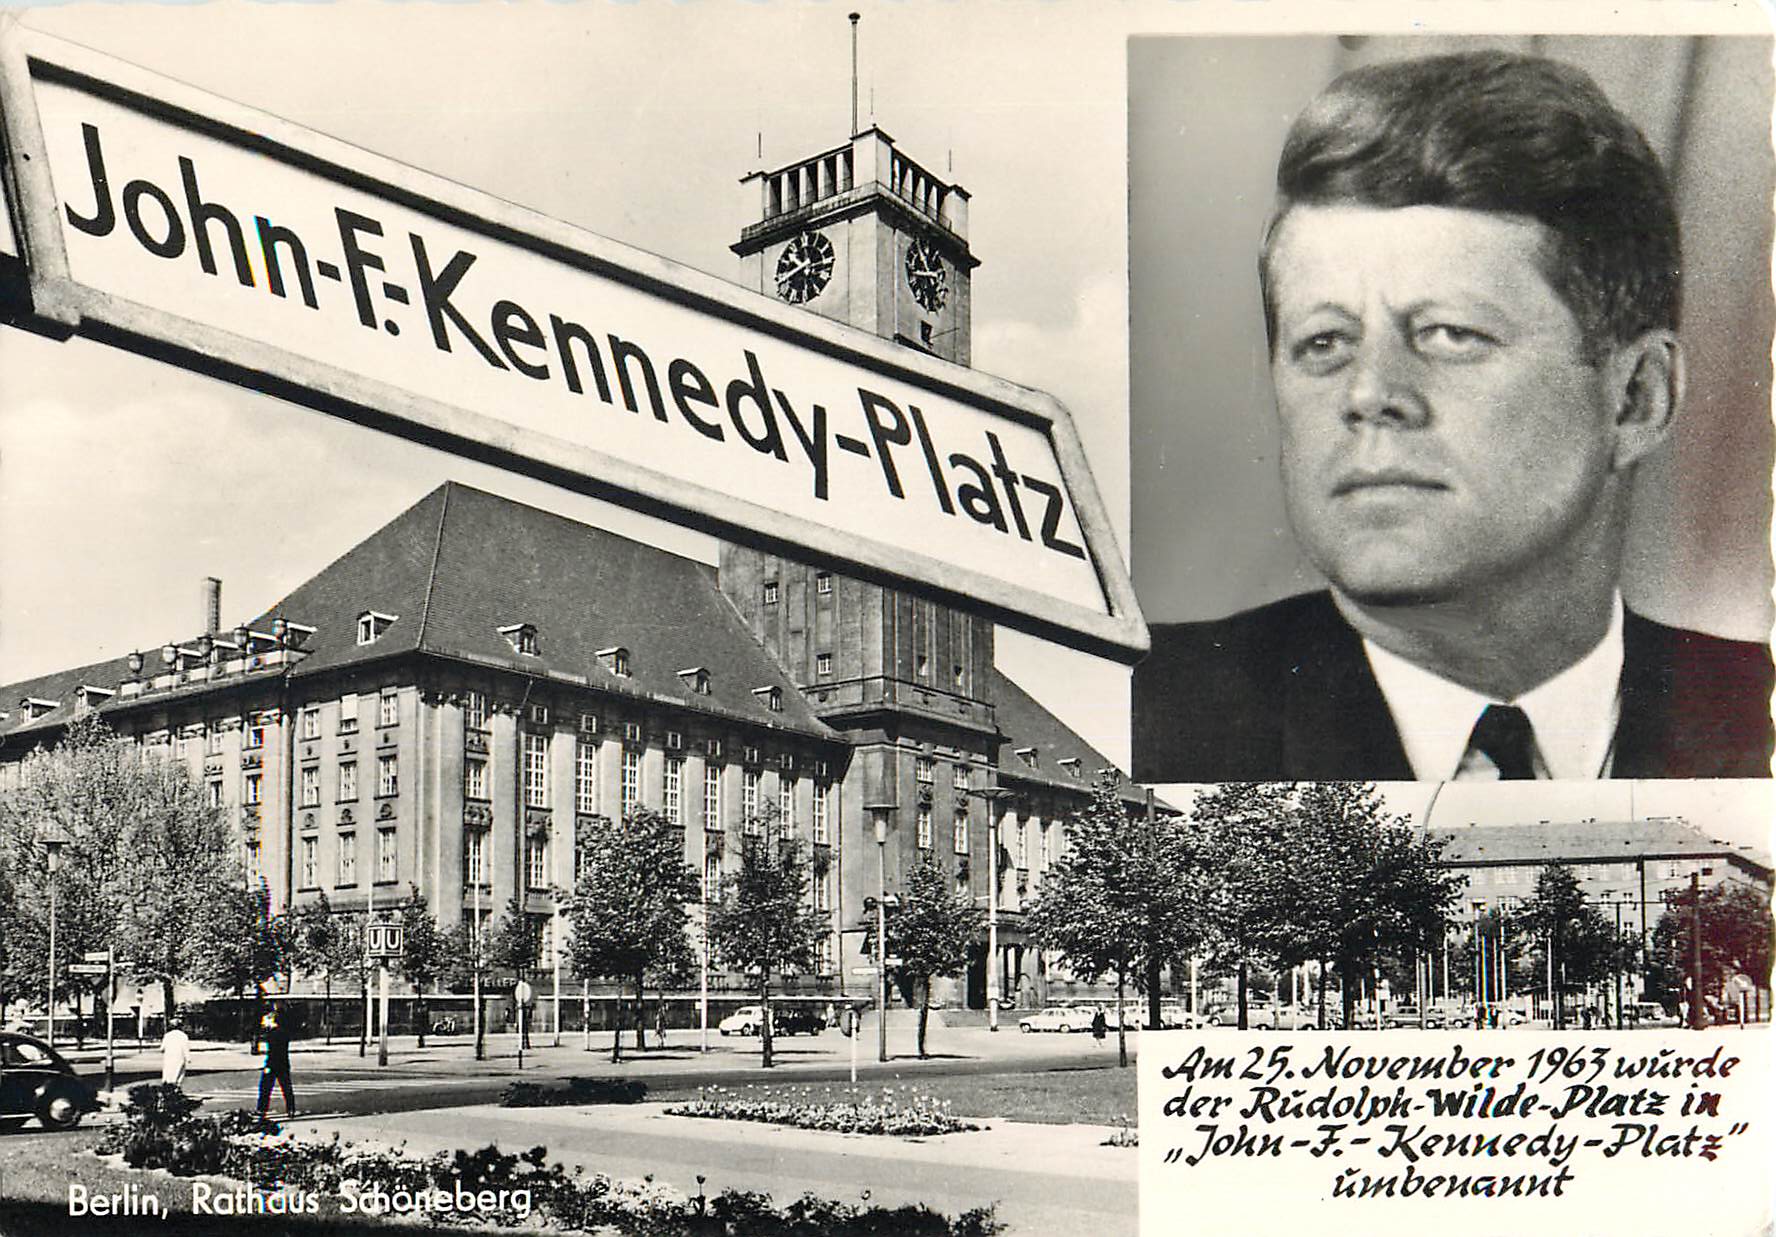 "John F. Kennedy Platz"